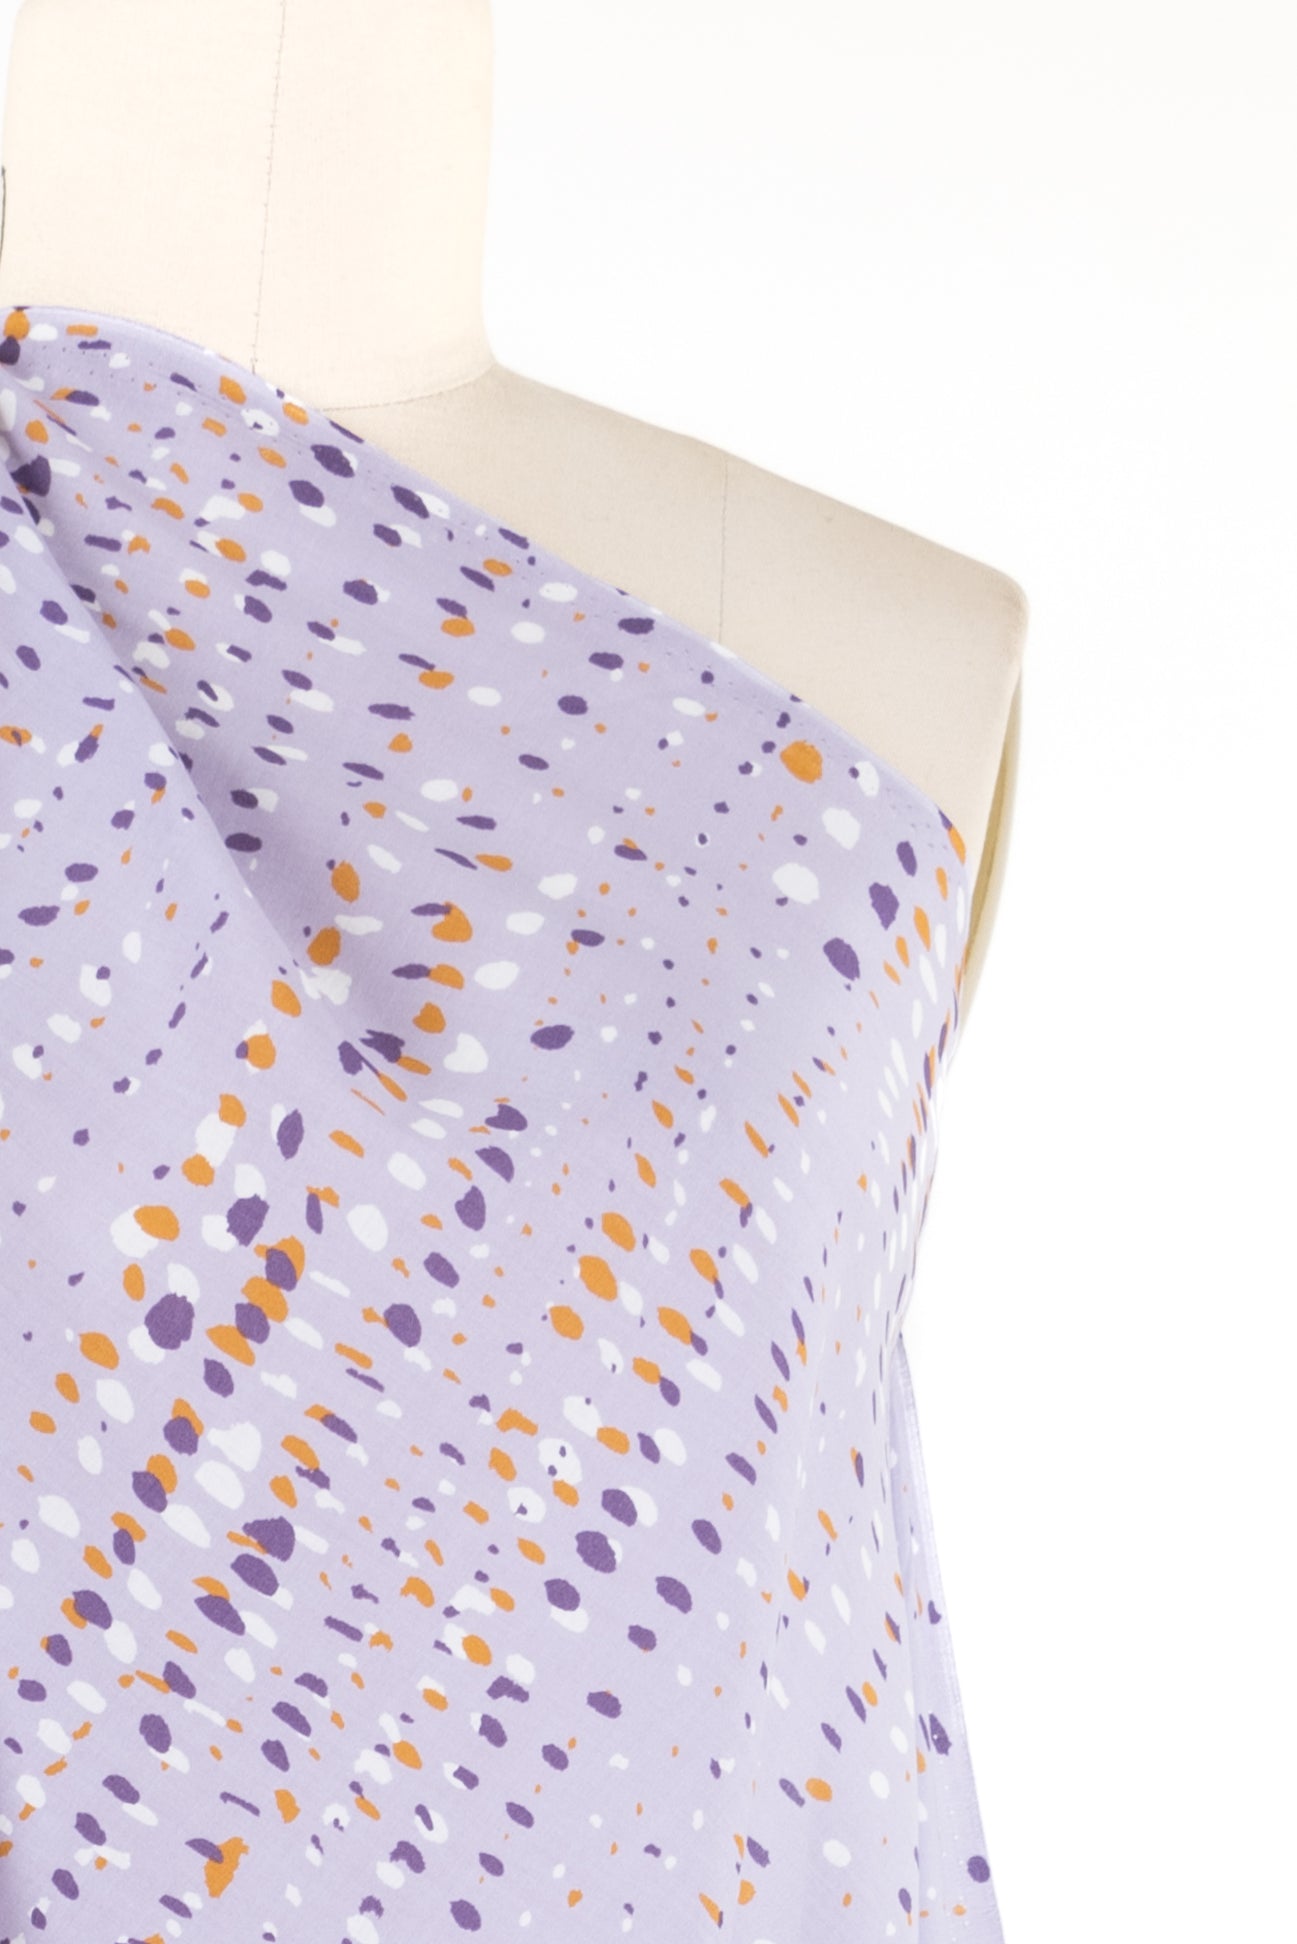 Japanese Wovens | Marcy Tilton | Online Fabric Store– Marcy Tilton Fabrics